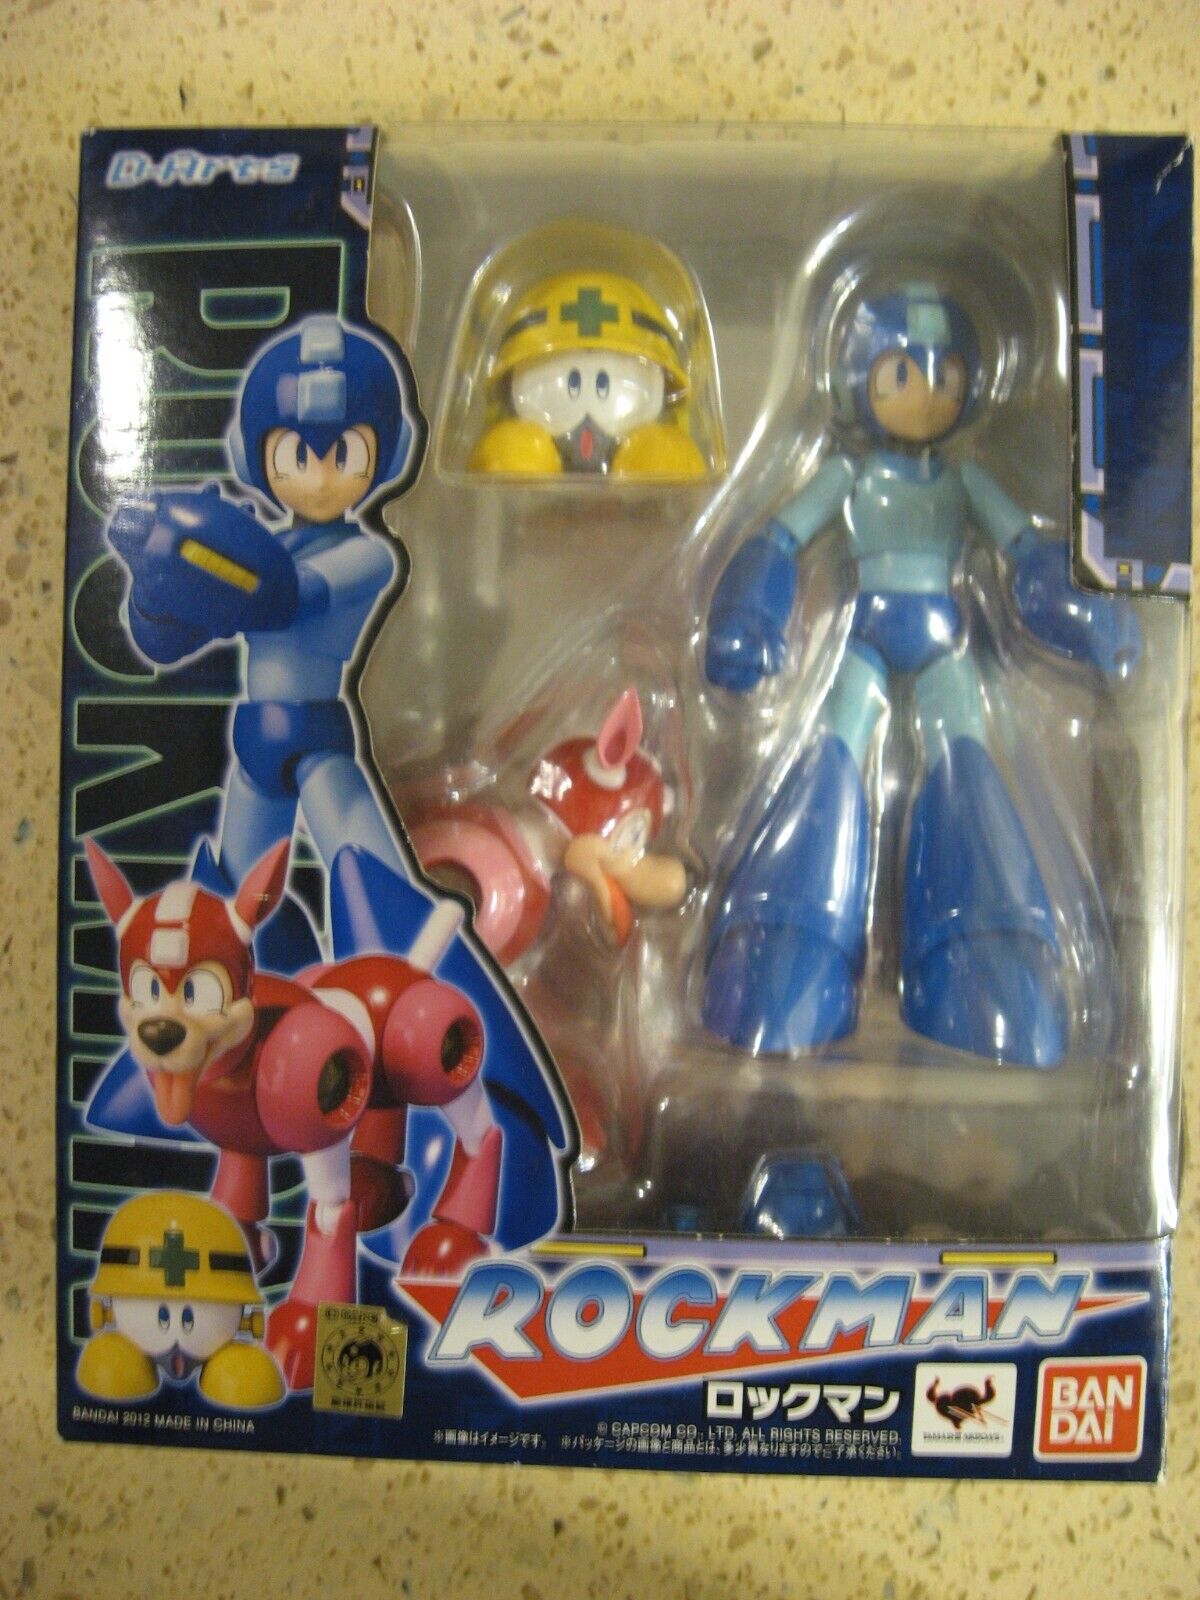 D-Arts Bandai Mega Man Rockman & Rush Met Action Figure Japanese Version - CIB